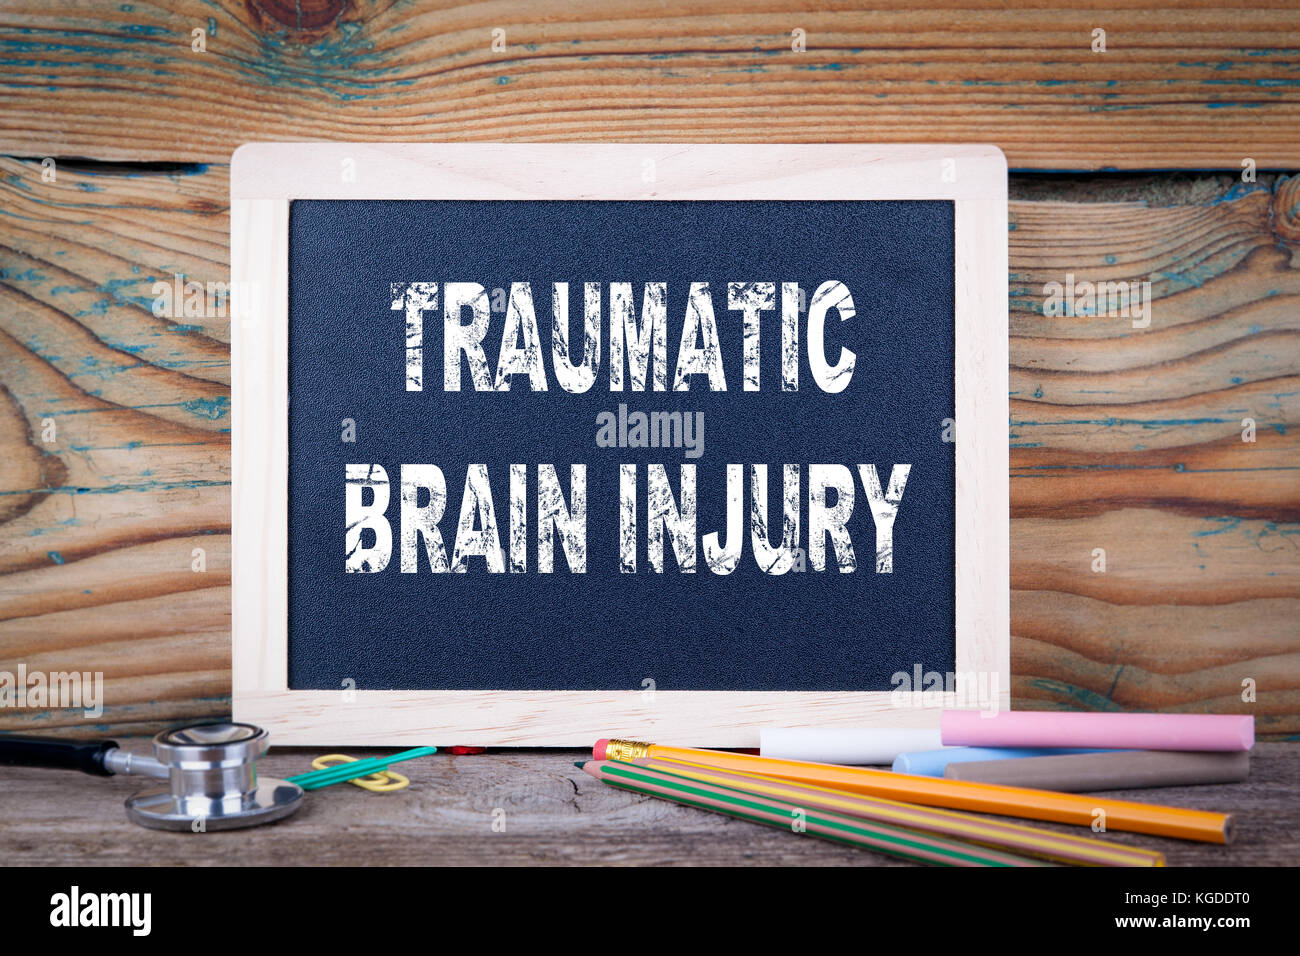 traumatic brain injury. Chalkboard on a wooden background Stock Photo